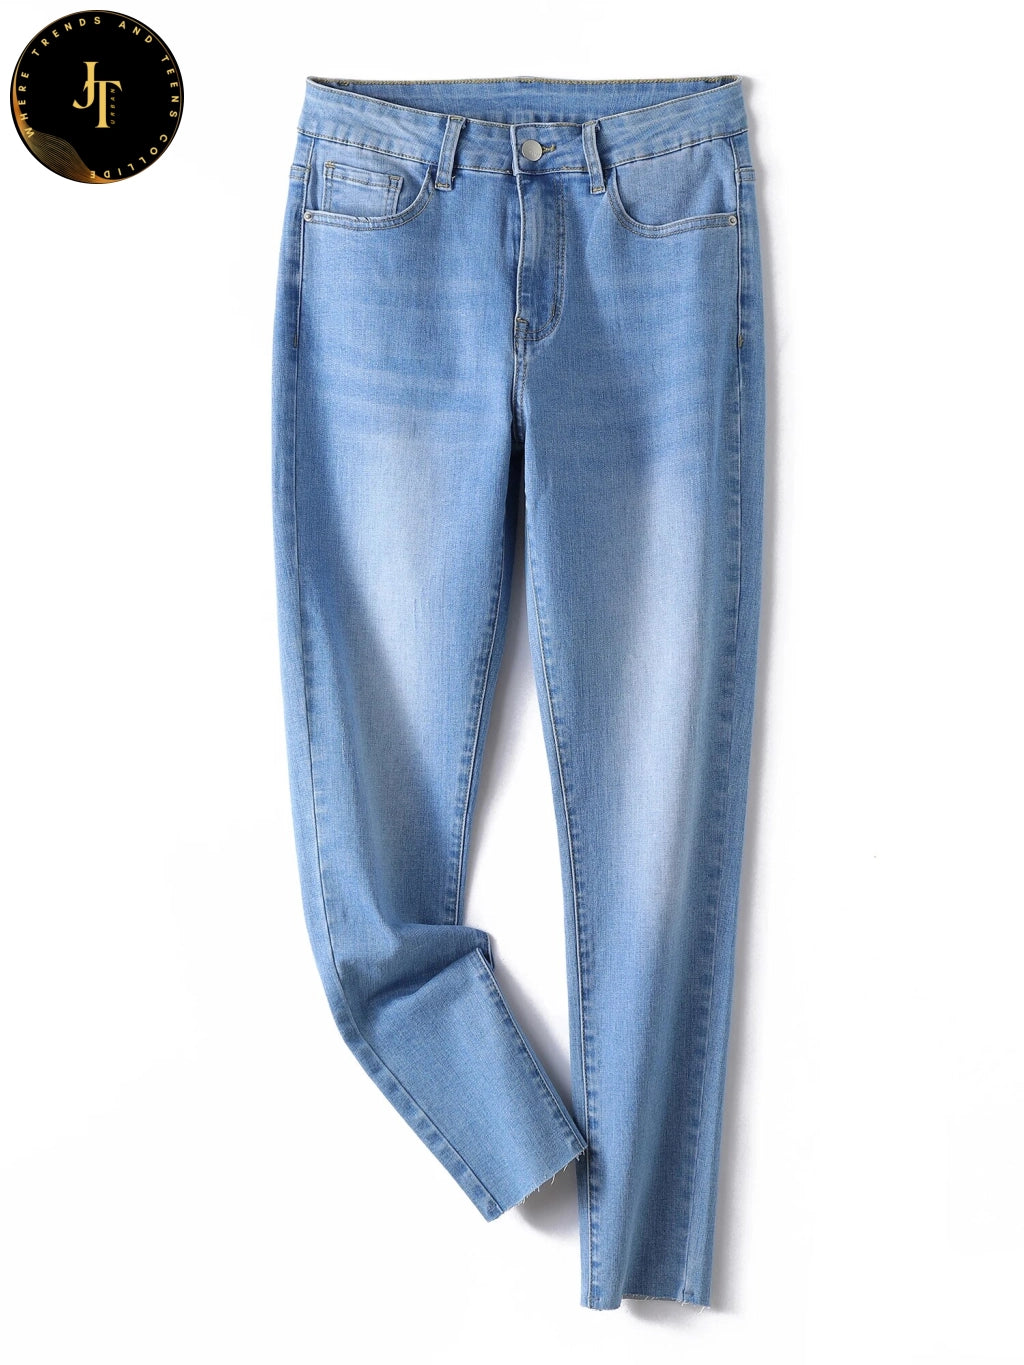 Women's Denim Pencil Jeans - Casual Denim Jeans for Women